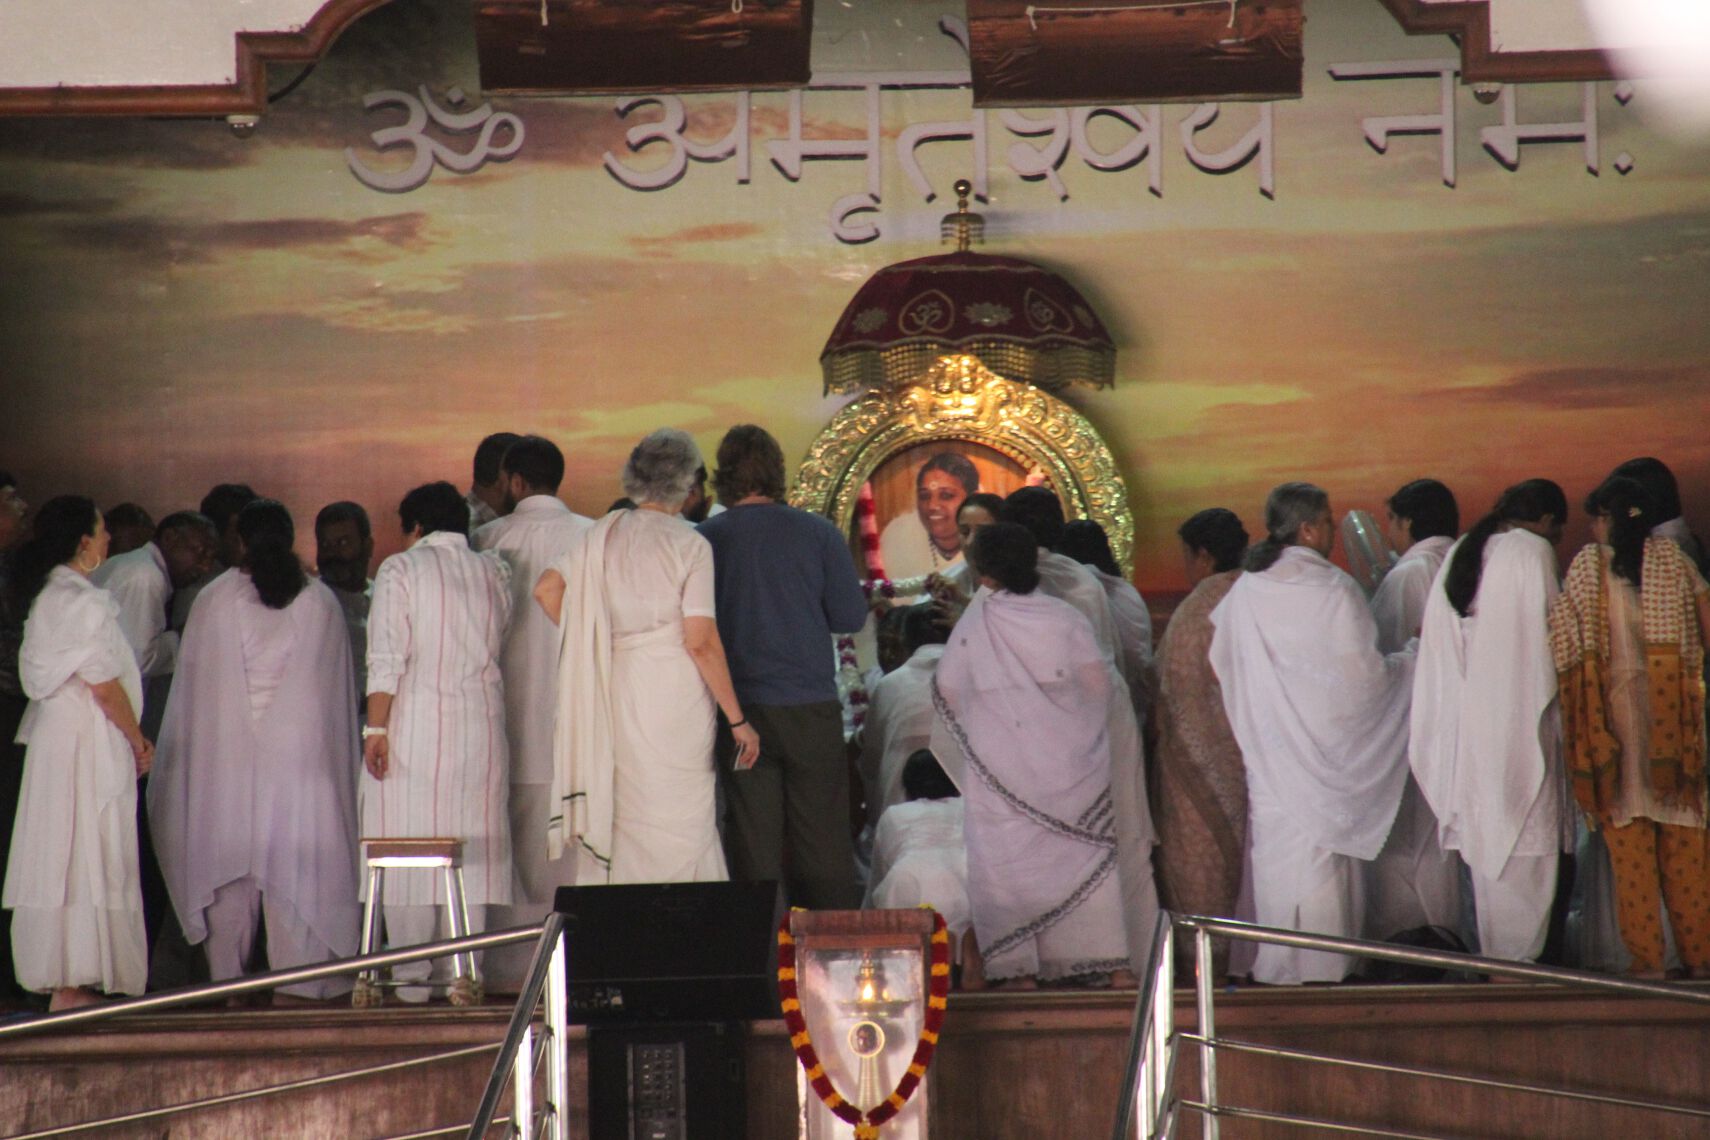 Amma hugs devotees in Amritapuri, India.